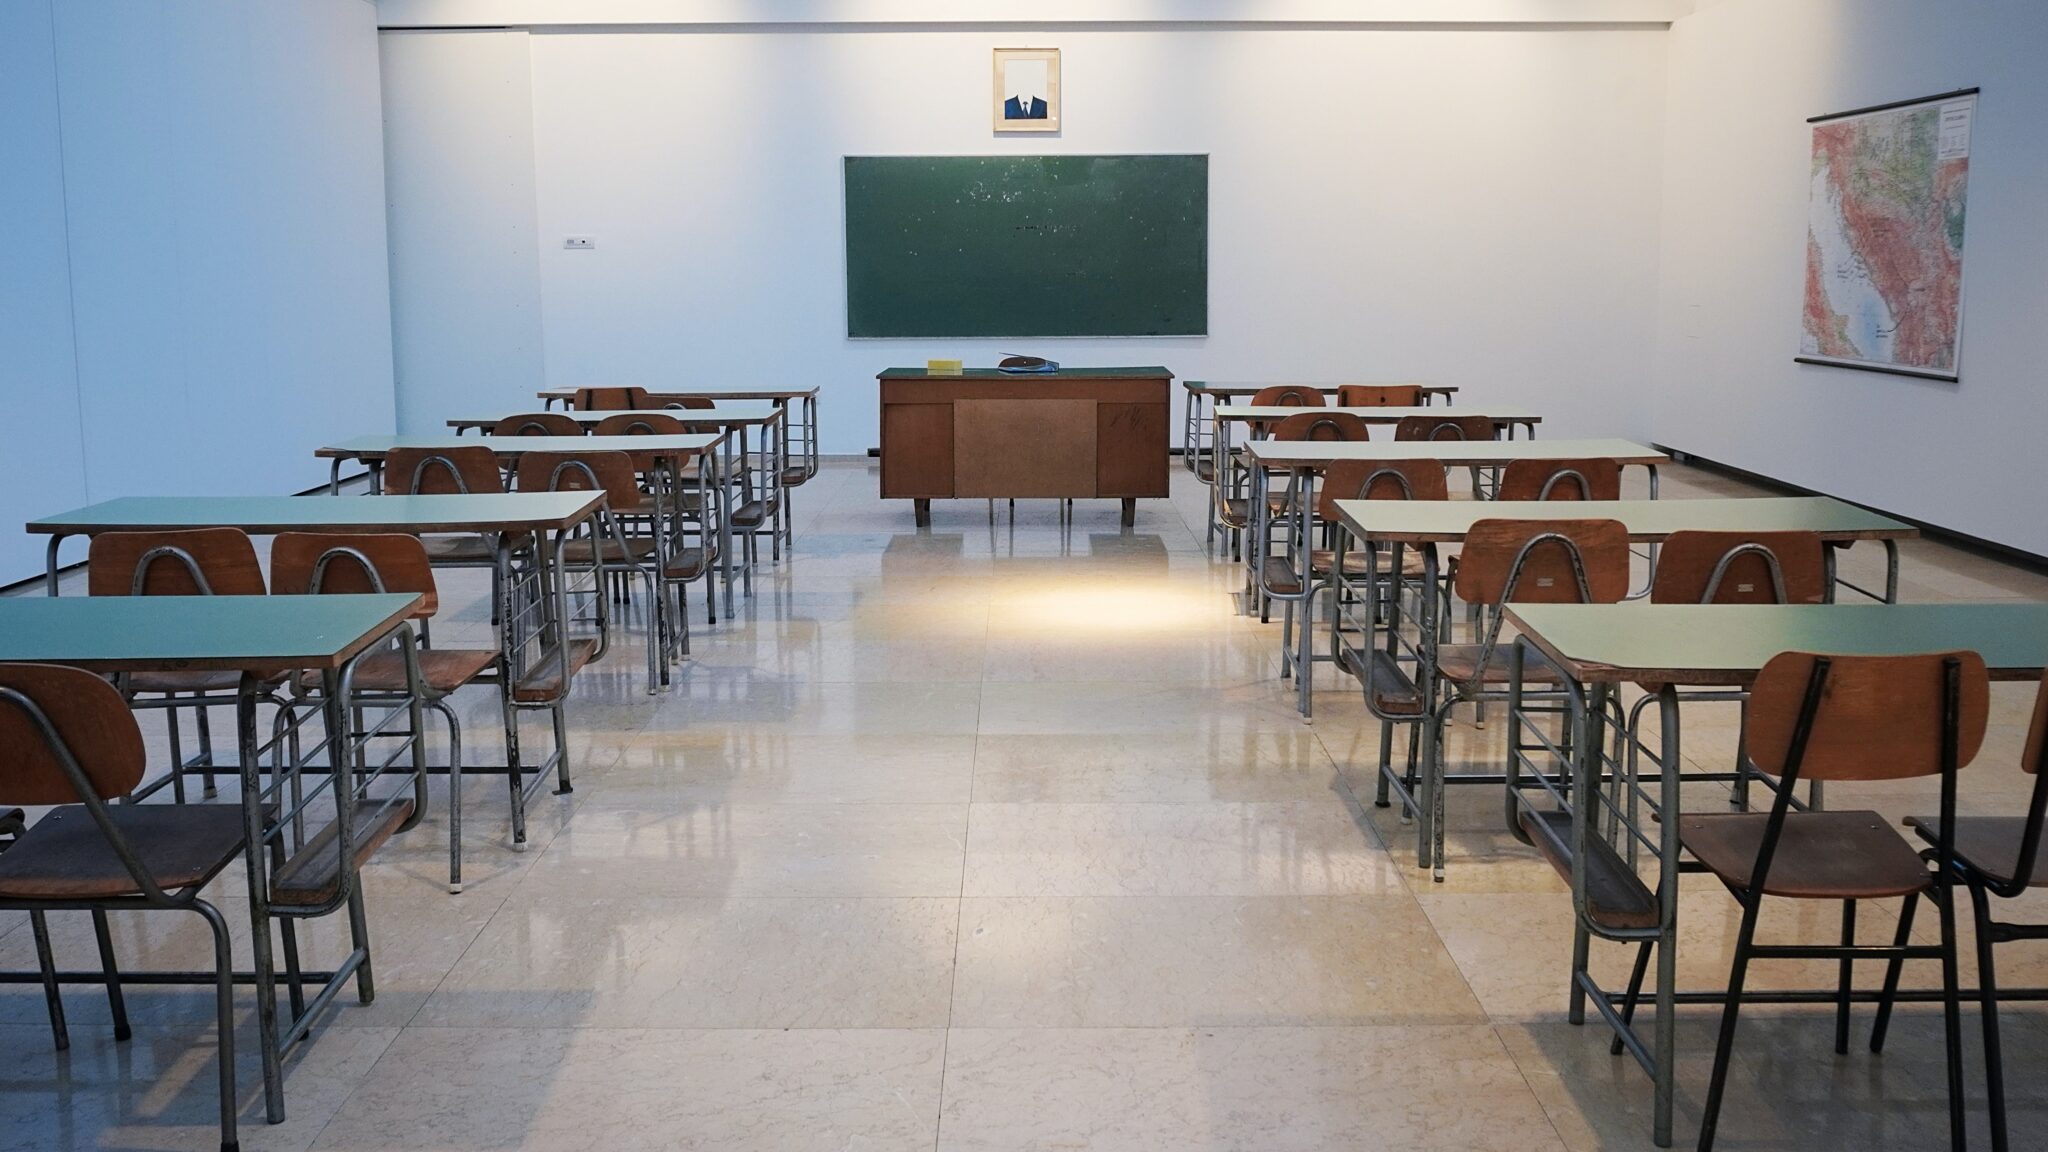 An empty school class room